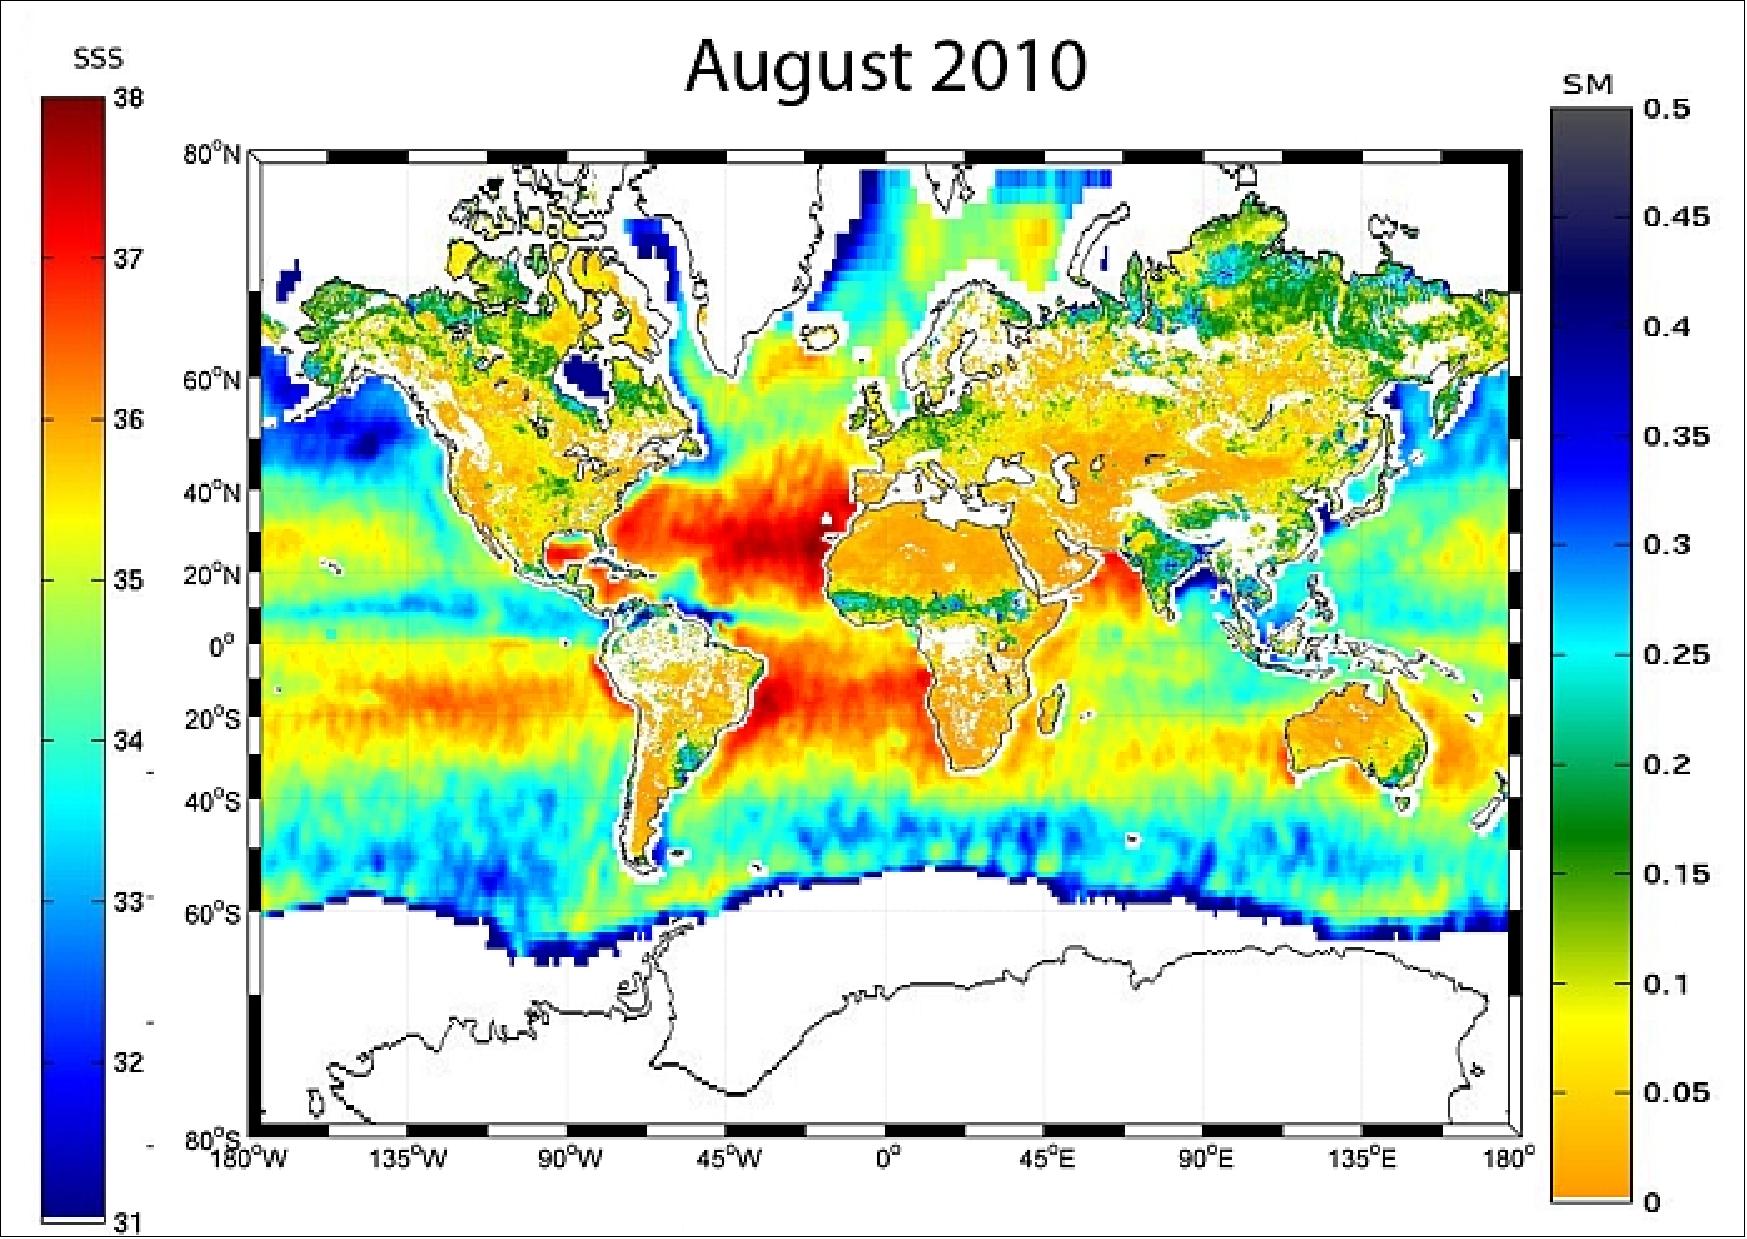 Figure 72: Global SSS (Sea Surface Salinity) and SM (Soil Moisture), image credit: ESA